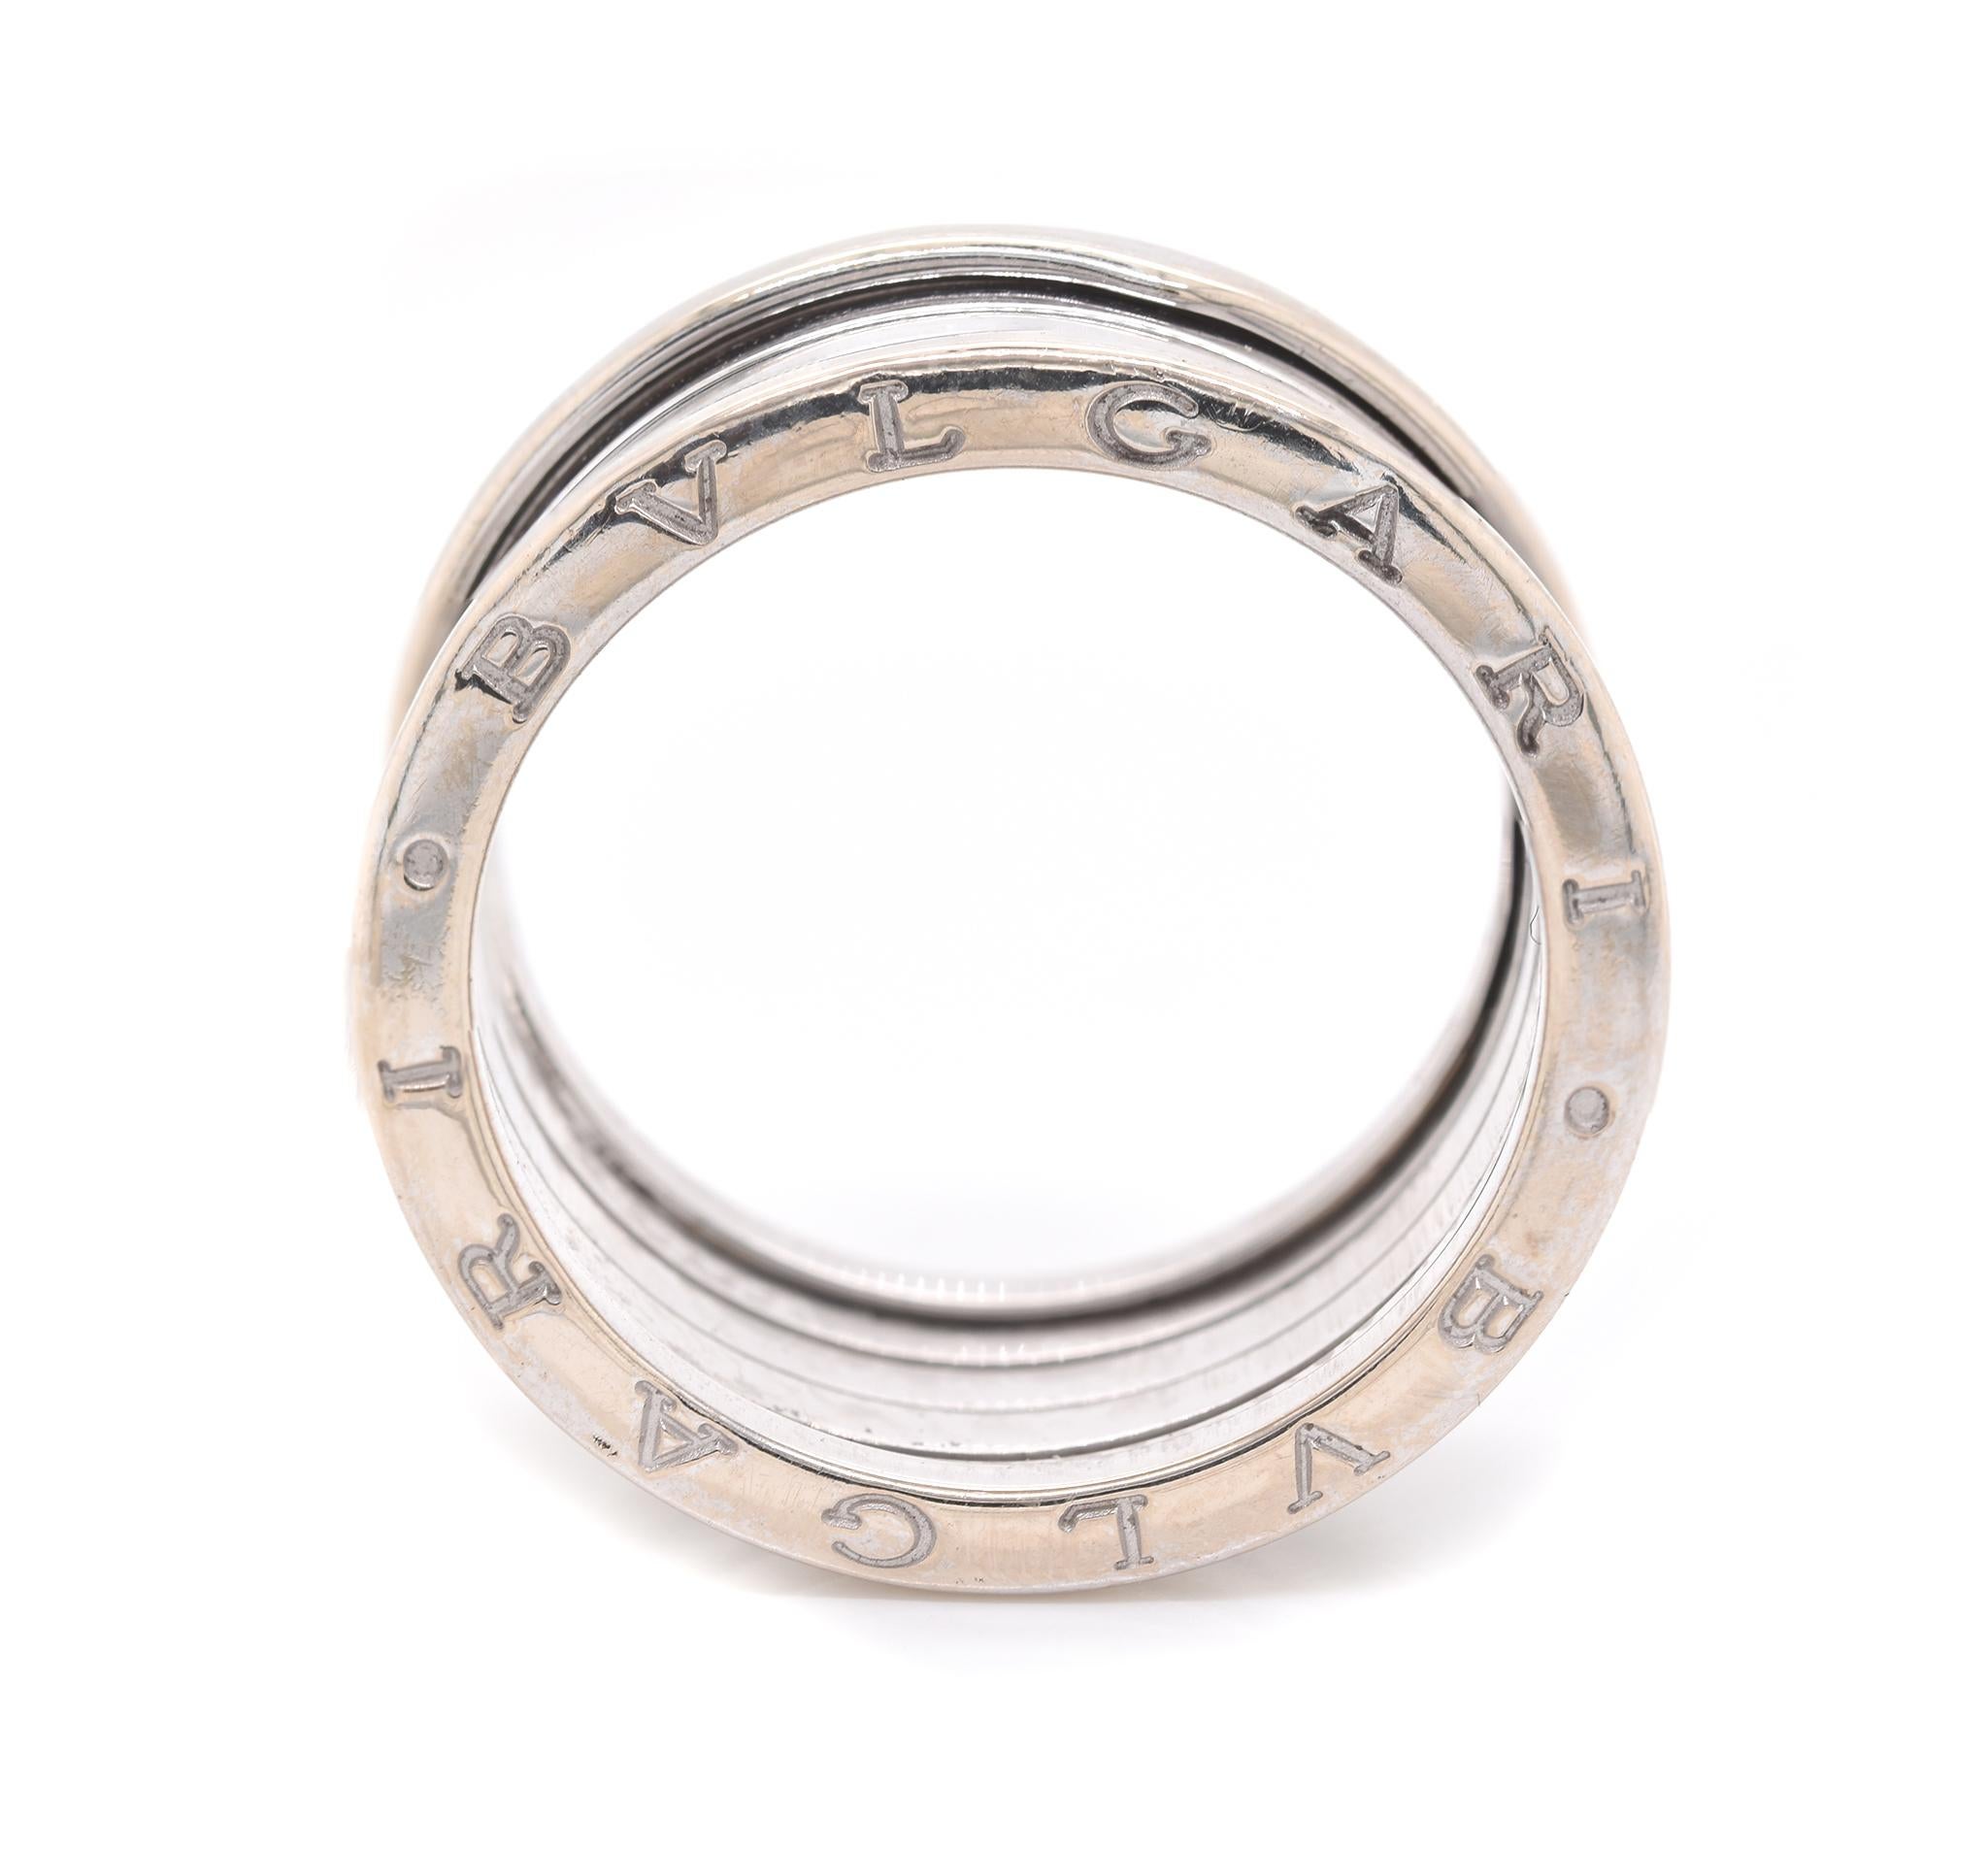 Designer: Bulgari
Material: 18K white gold
Dimensions: ring measures 11.25mm wide
Size: 11
Weight: 13.95 grams
